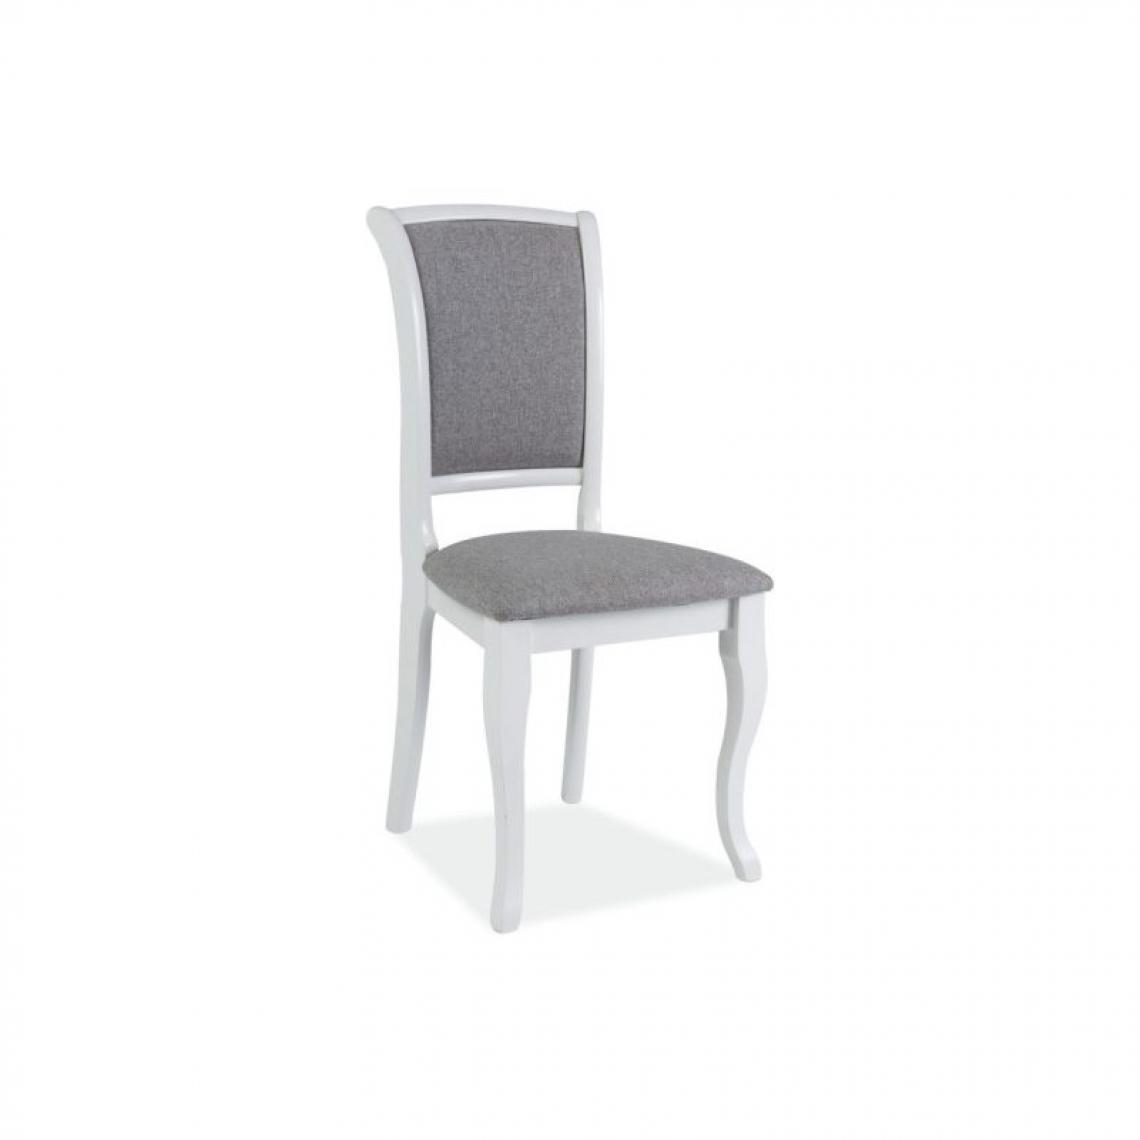 Ac-Deco - Chaise de salon - L 45 x P 42 x H 96 cm - Gris et blanc - Chaises